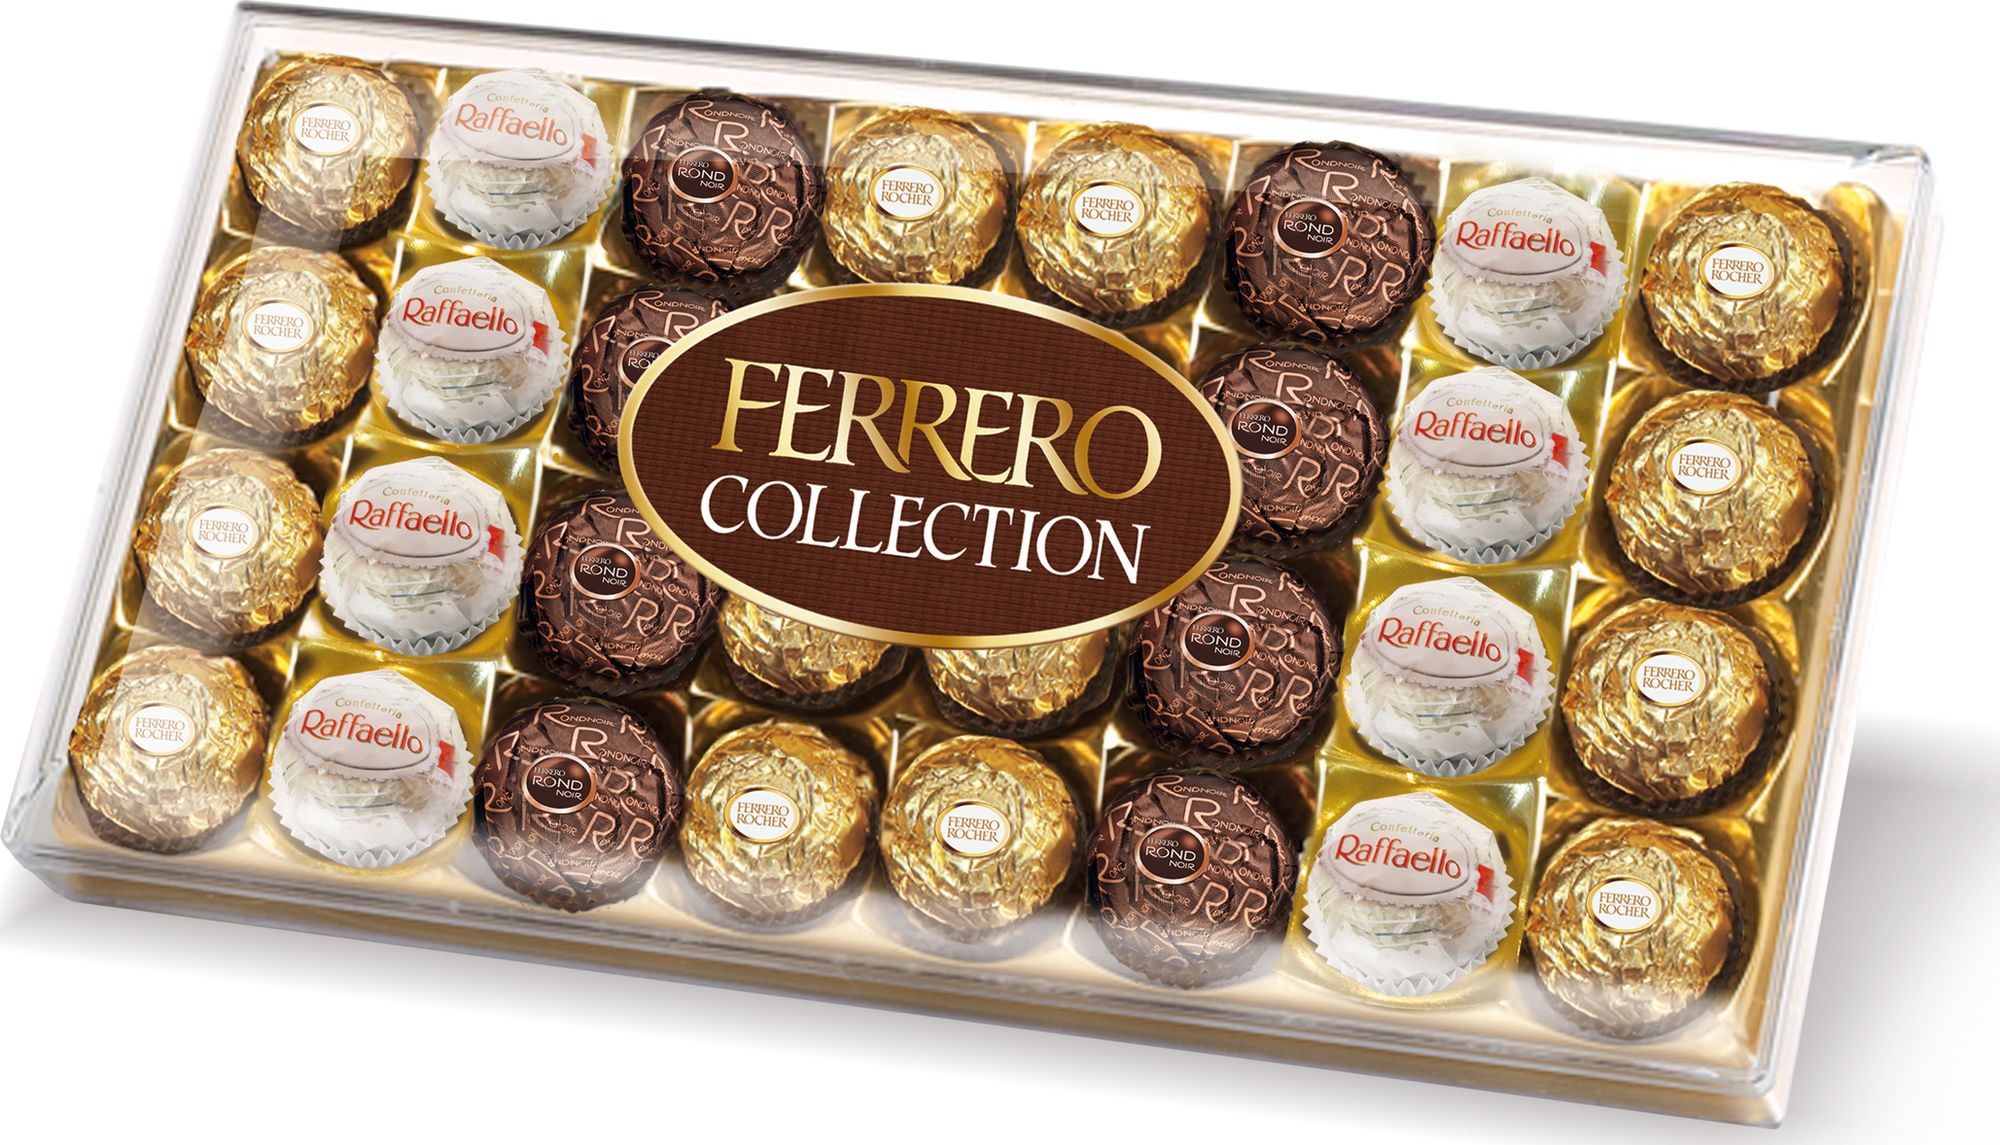 Т т collection. Набор конфет Ferrero collection, 359 г. Конфеты Ferrero collection т32. Ферреро коллекция 359.2г. Ферреро Роше конфеты большая коробка.